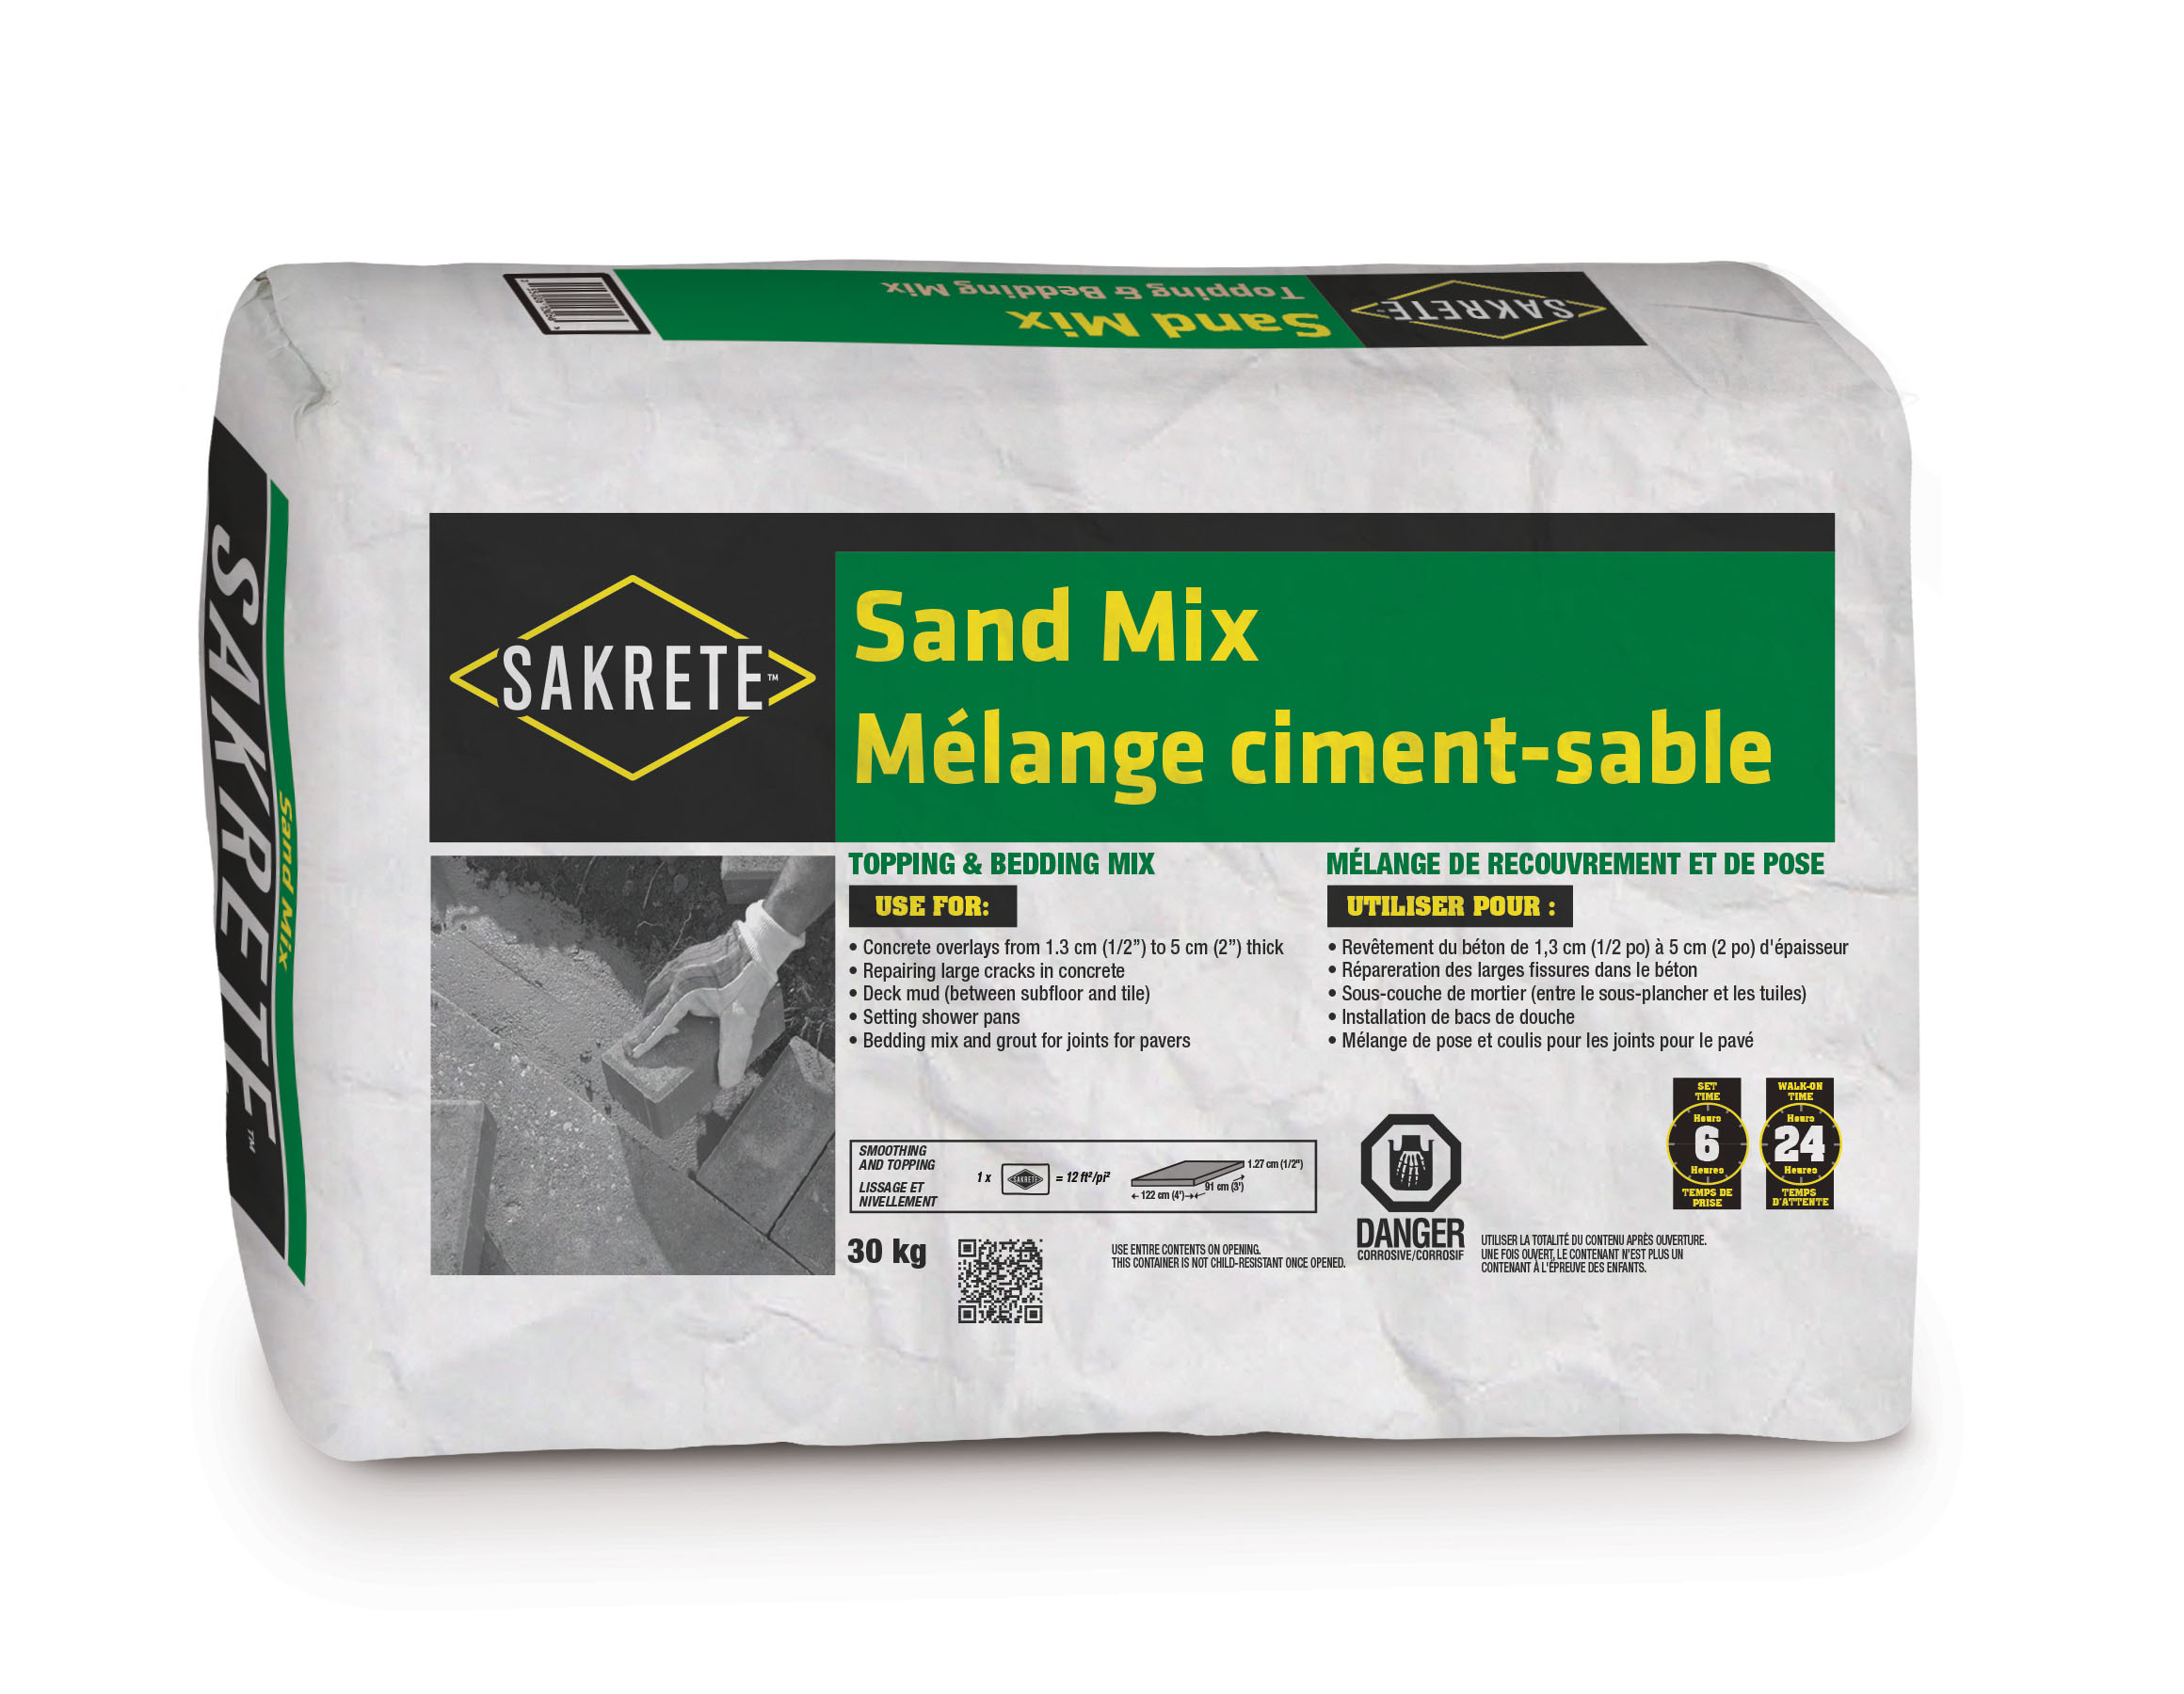 SAKRETE Sand Mix > KING Home Improvement Products